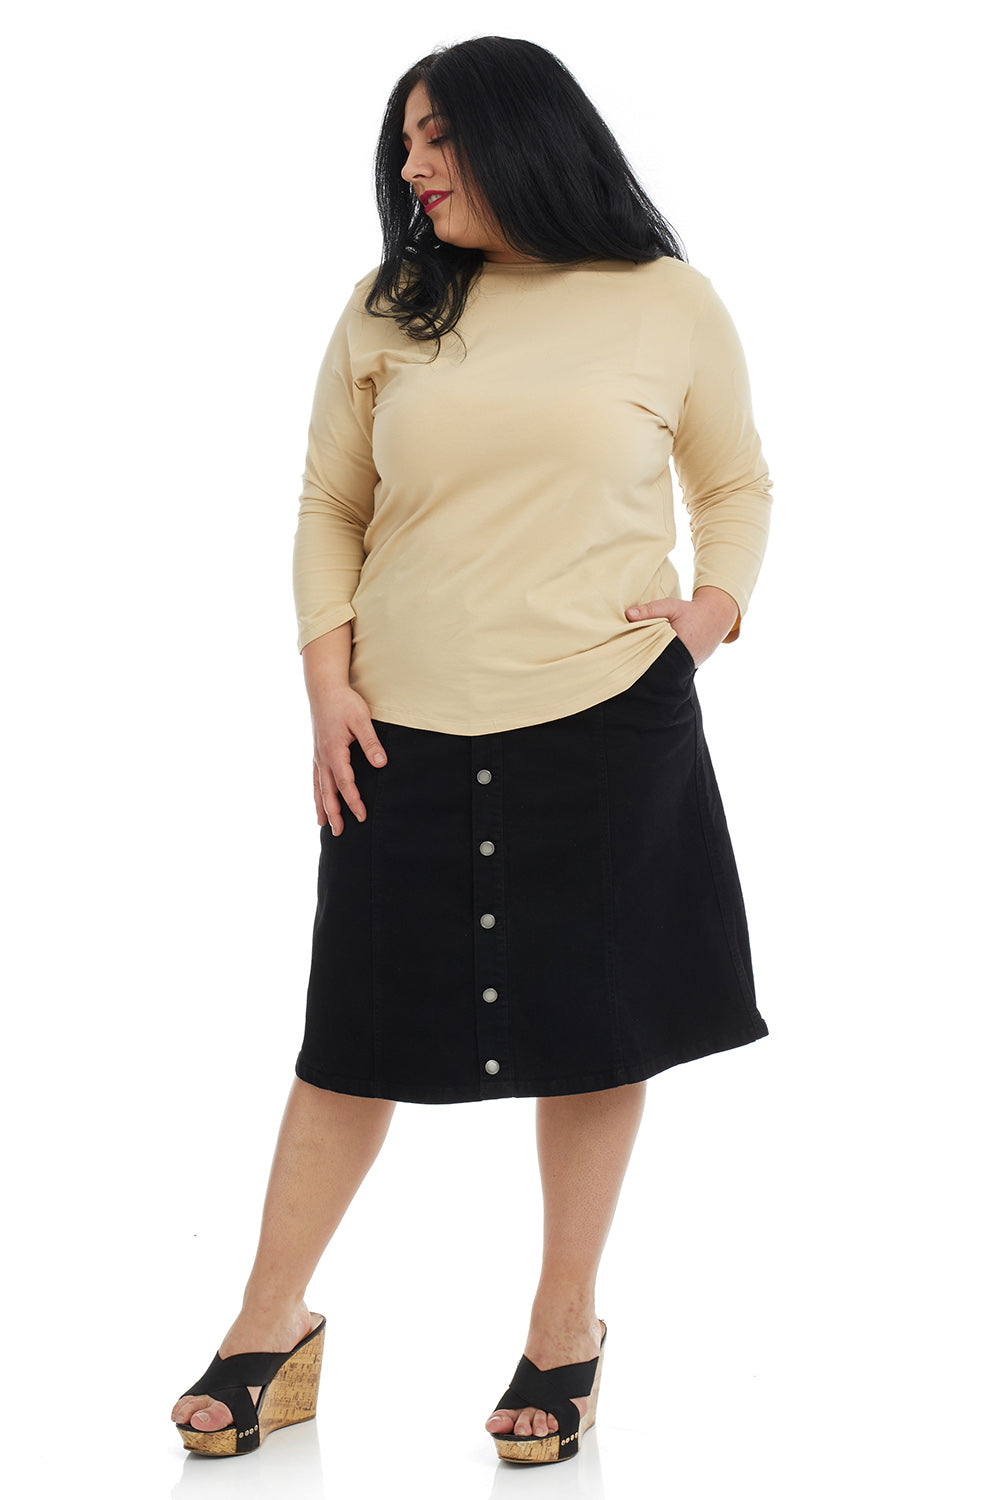 Esteez CHELSEA Denim Skirt - Button Down Flary A-Line Jean Skirt for WOMEN